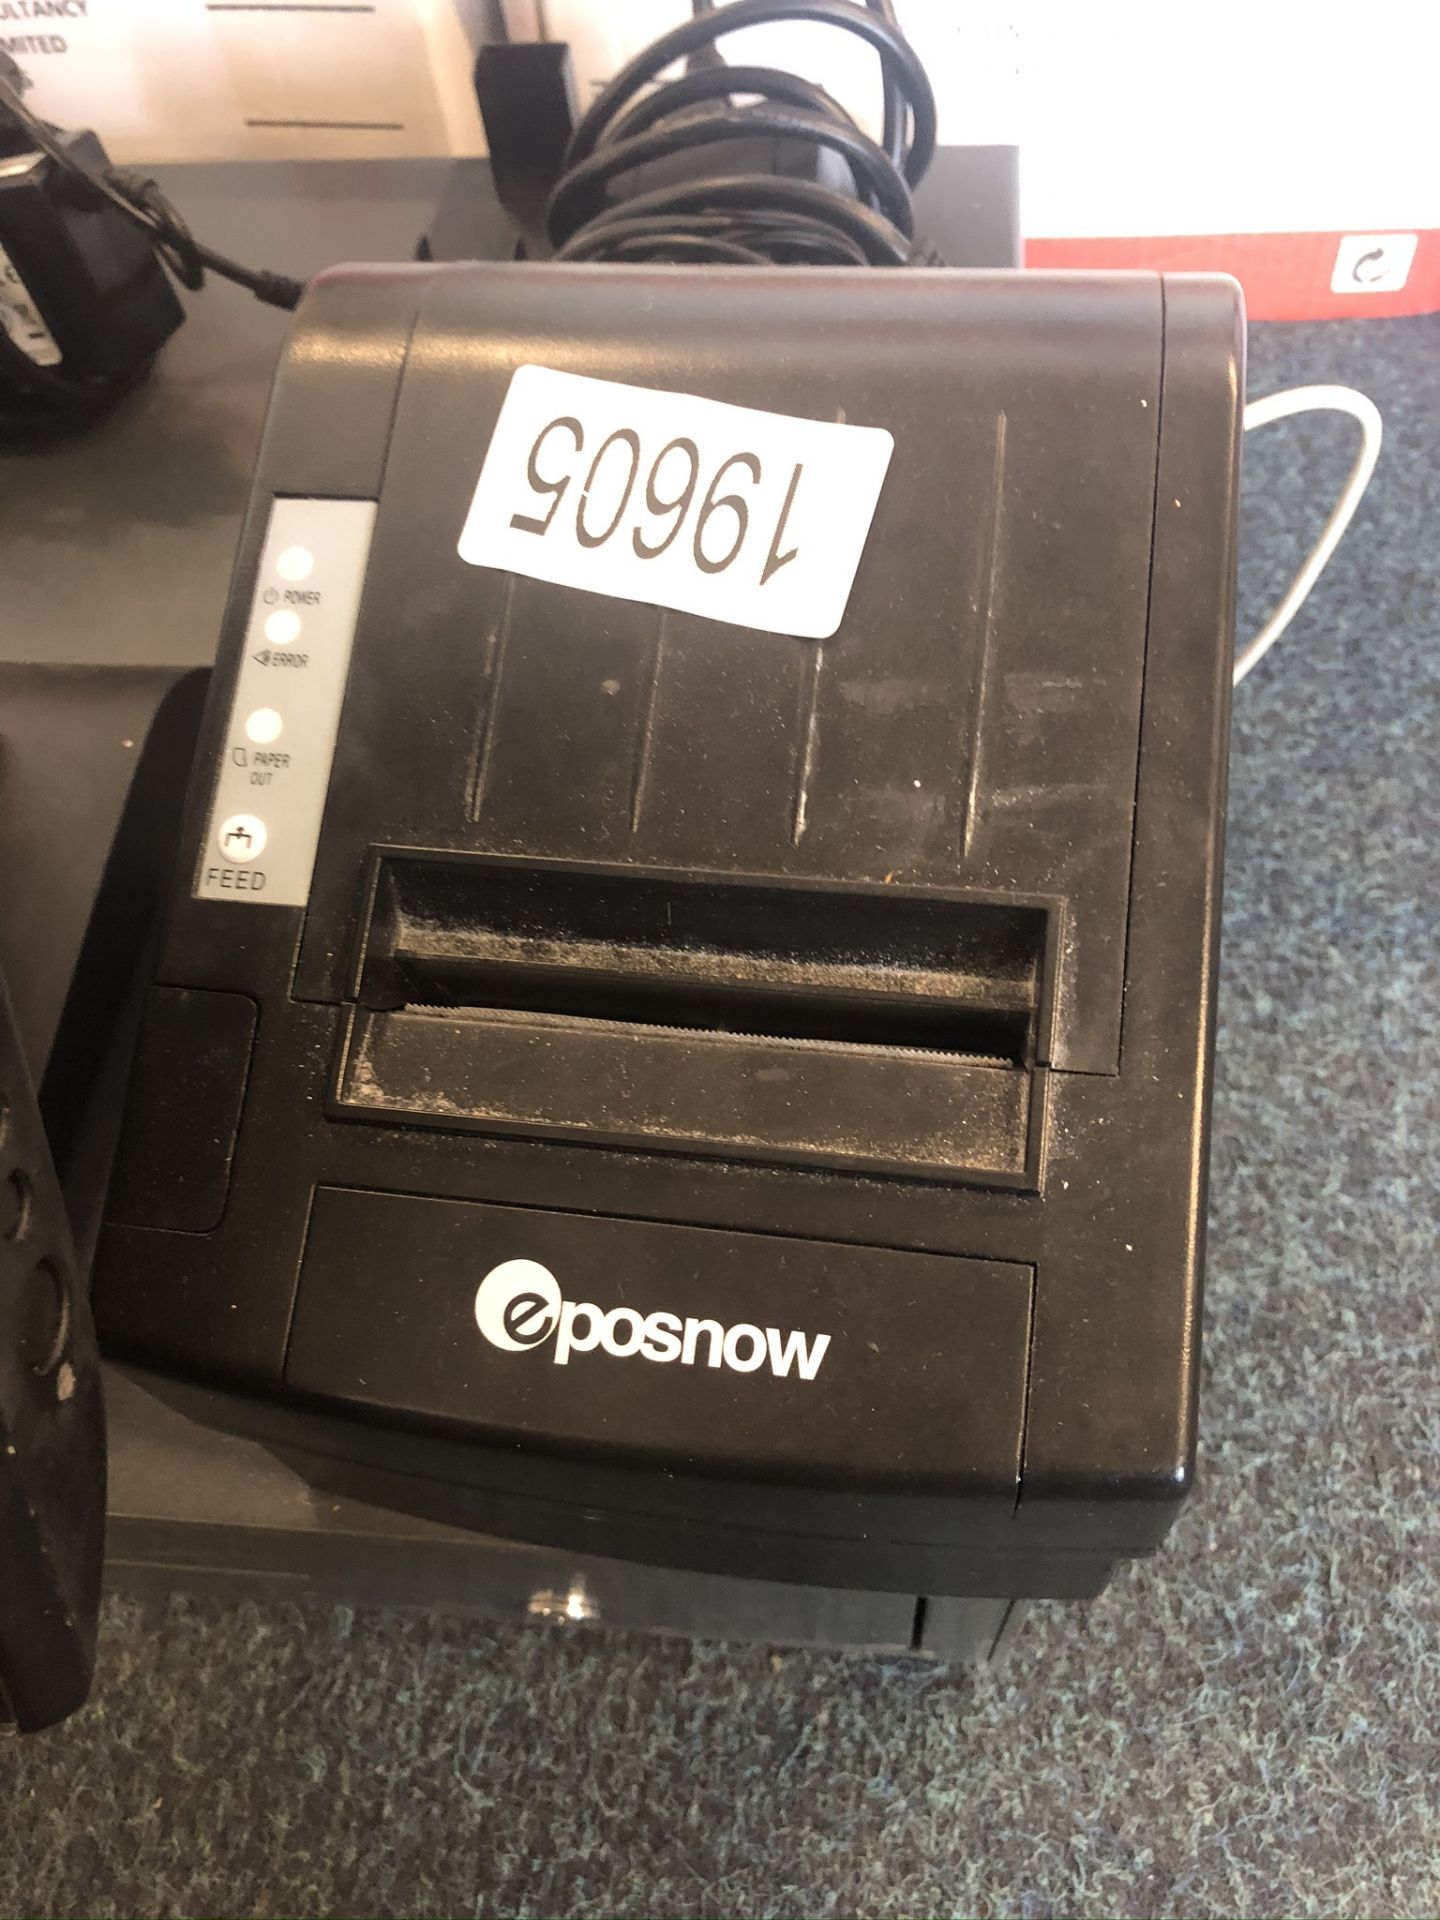 EposNow Pro C15 15.1" Epos Terminal w/ Cash Drawer & Thermal Receipt Printer - Image 4 of 5